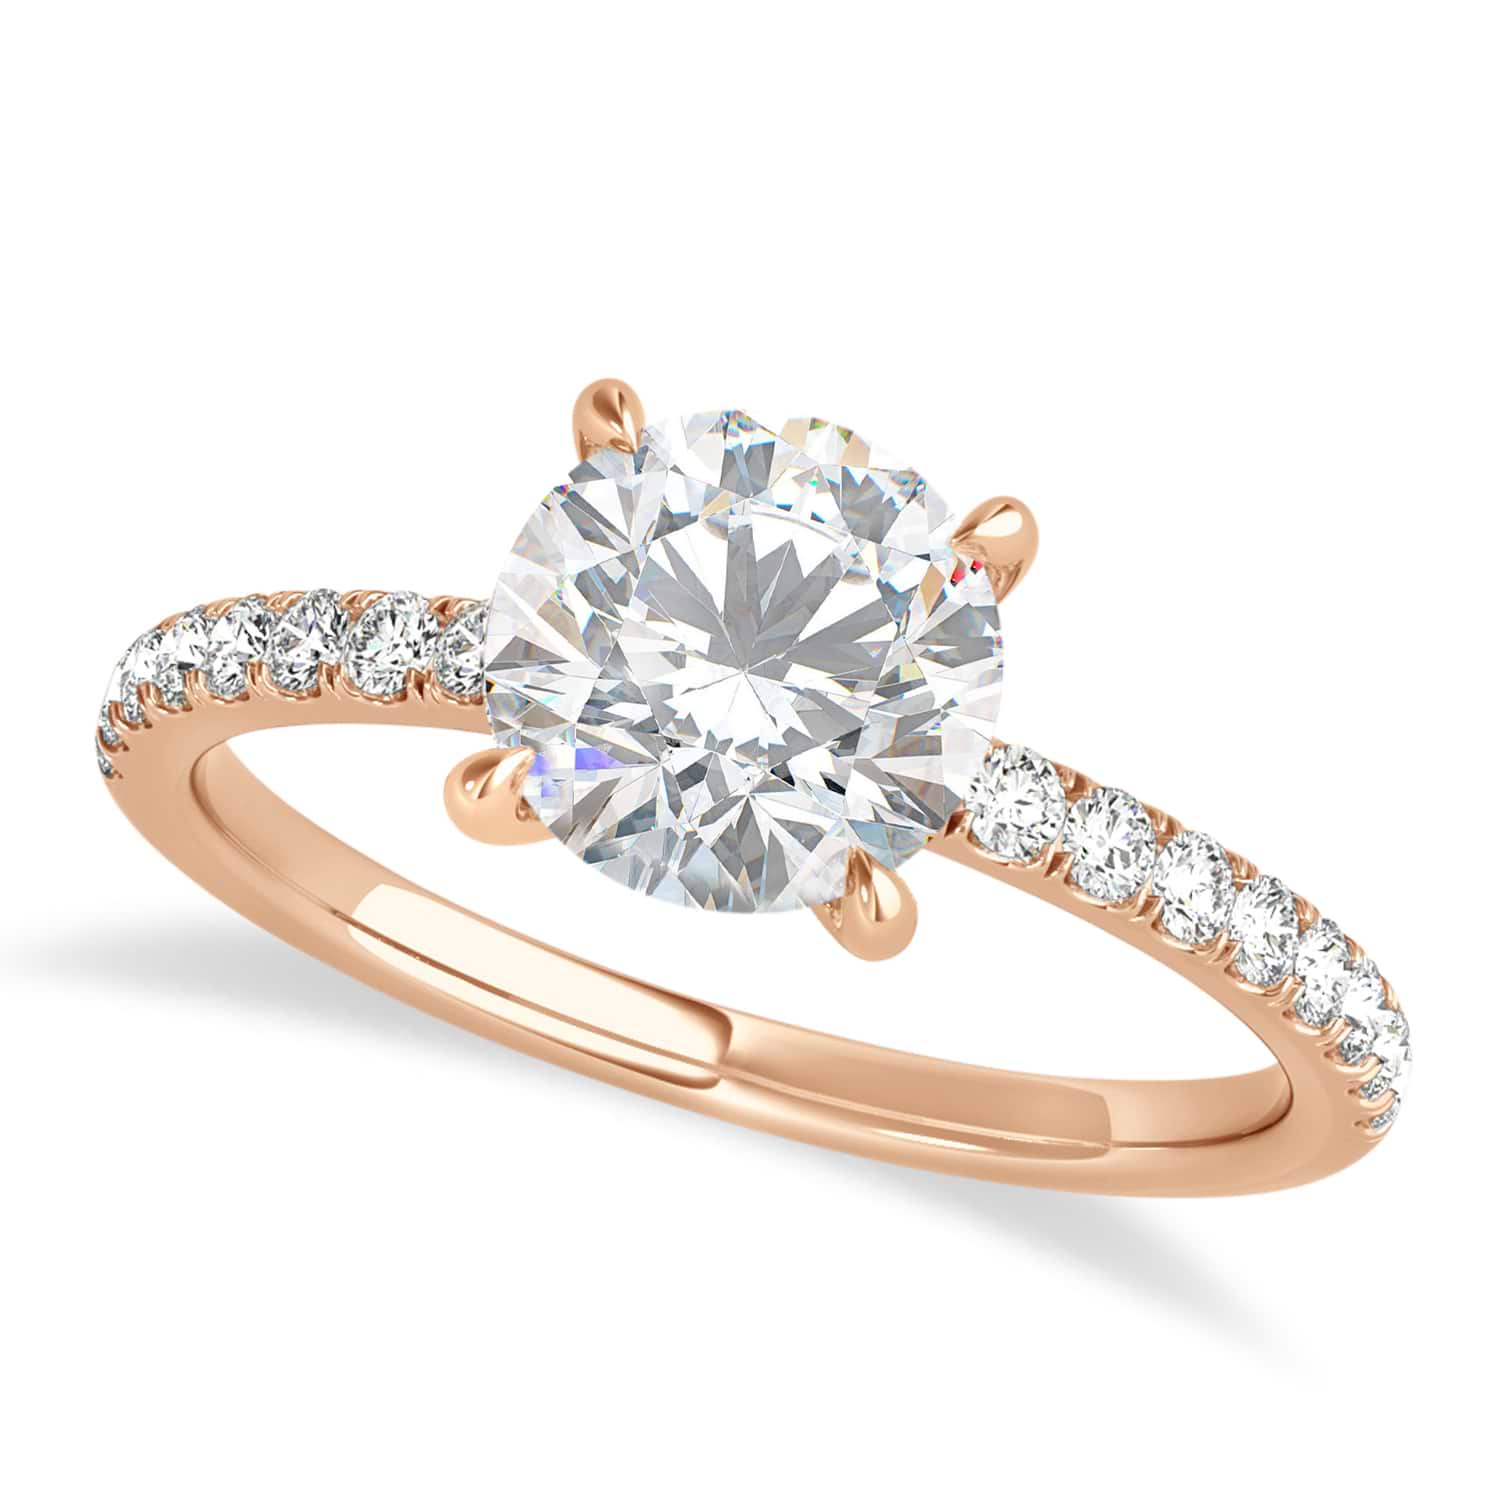 Round Moissanite & Diamond Single Row Hidden Halo Engagement Ring 18k Rose Gold (1.25ct)